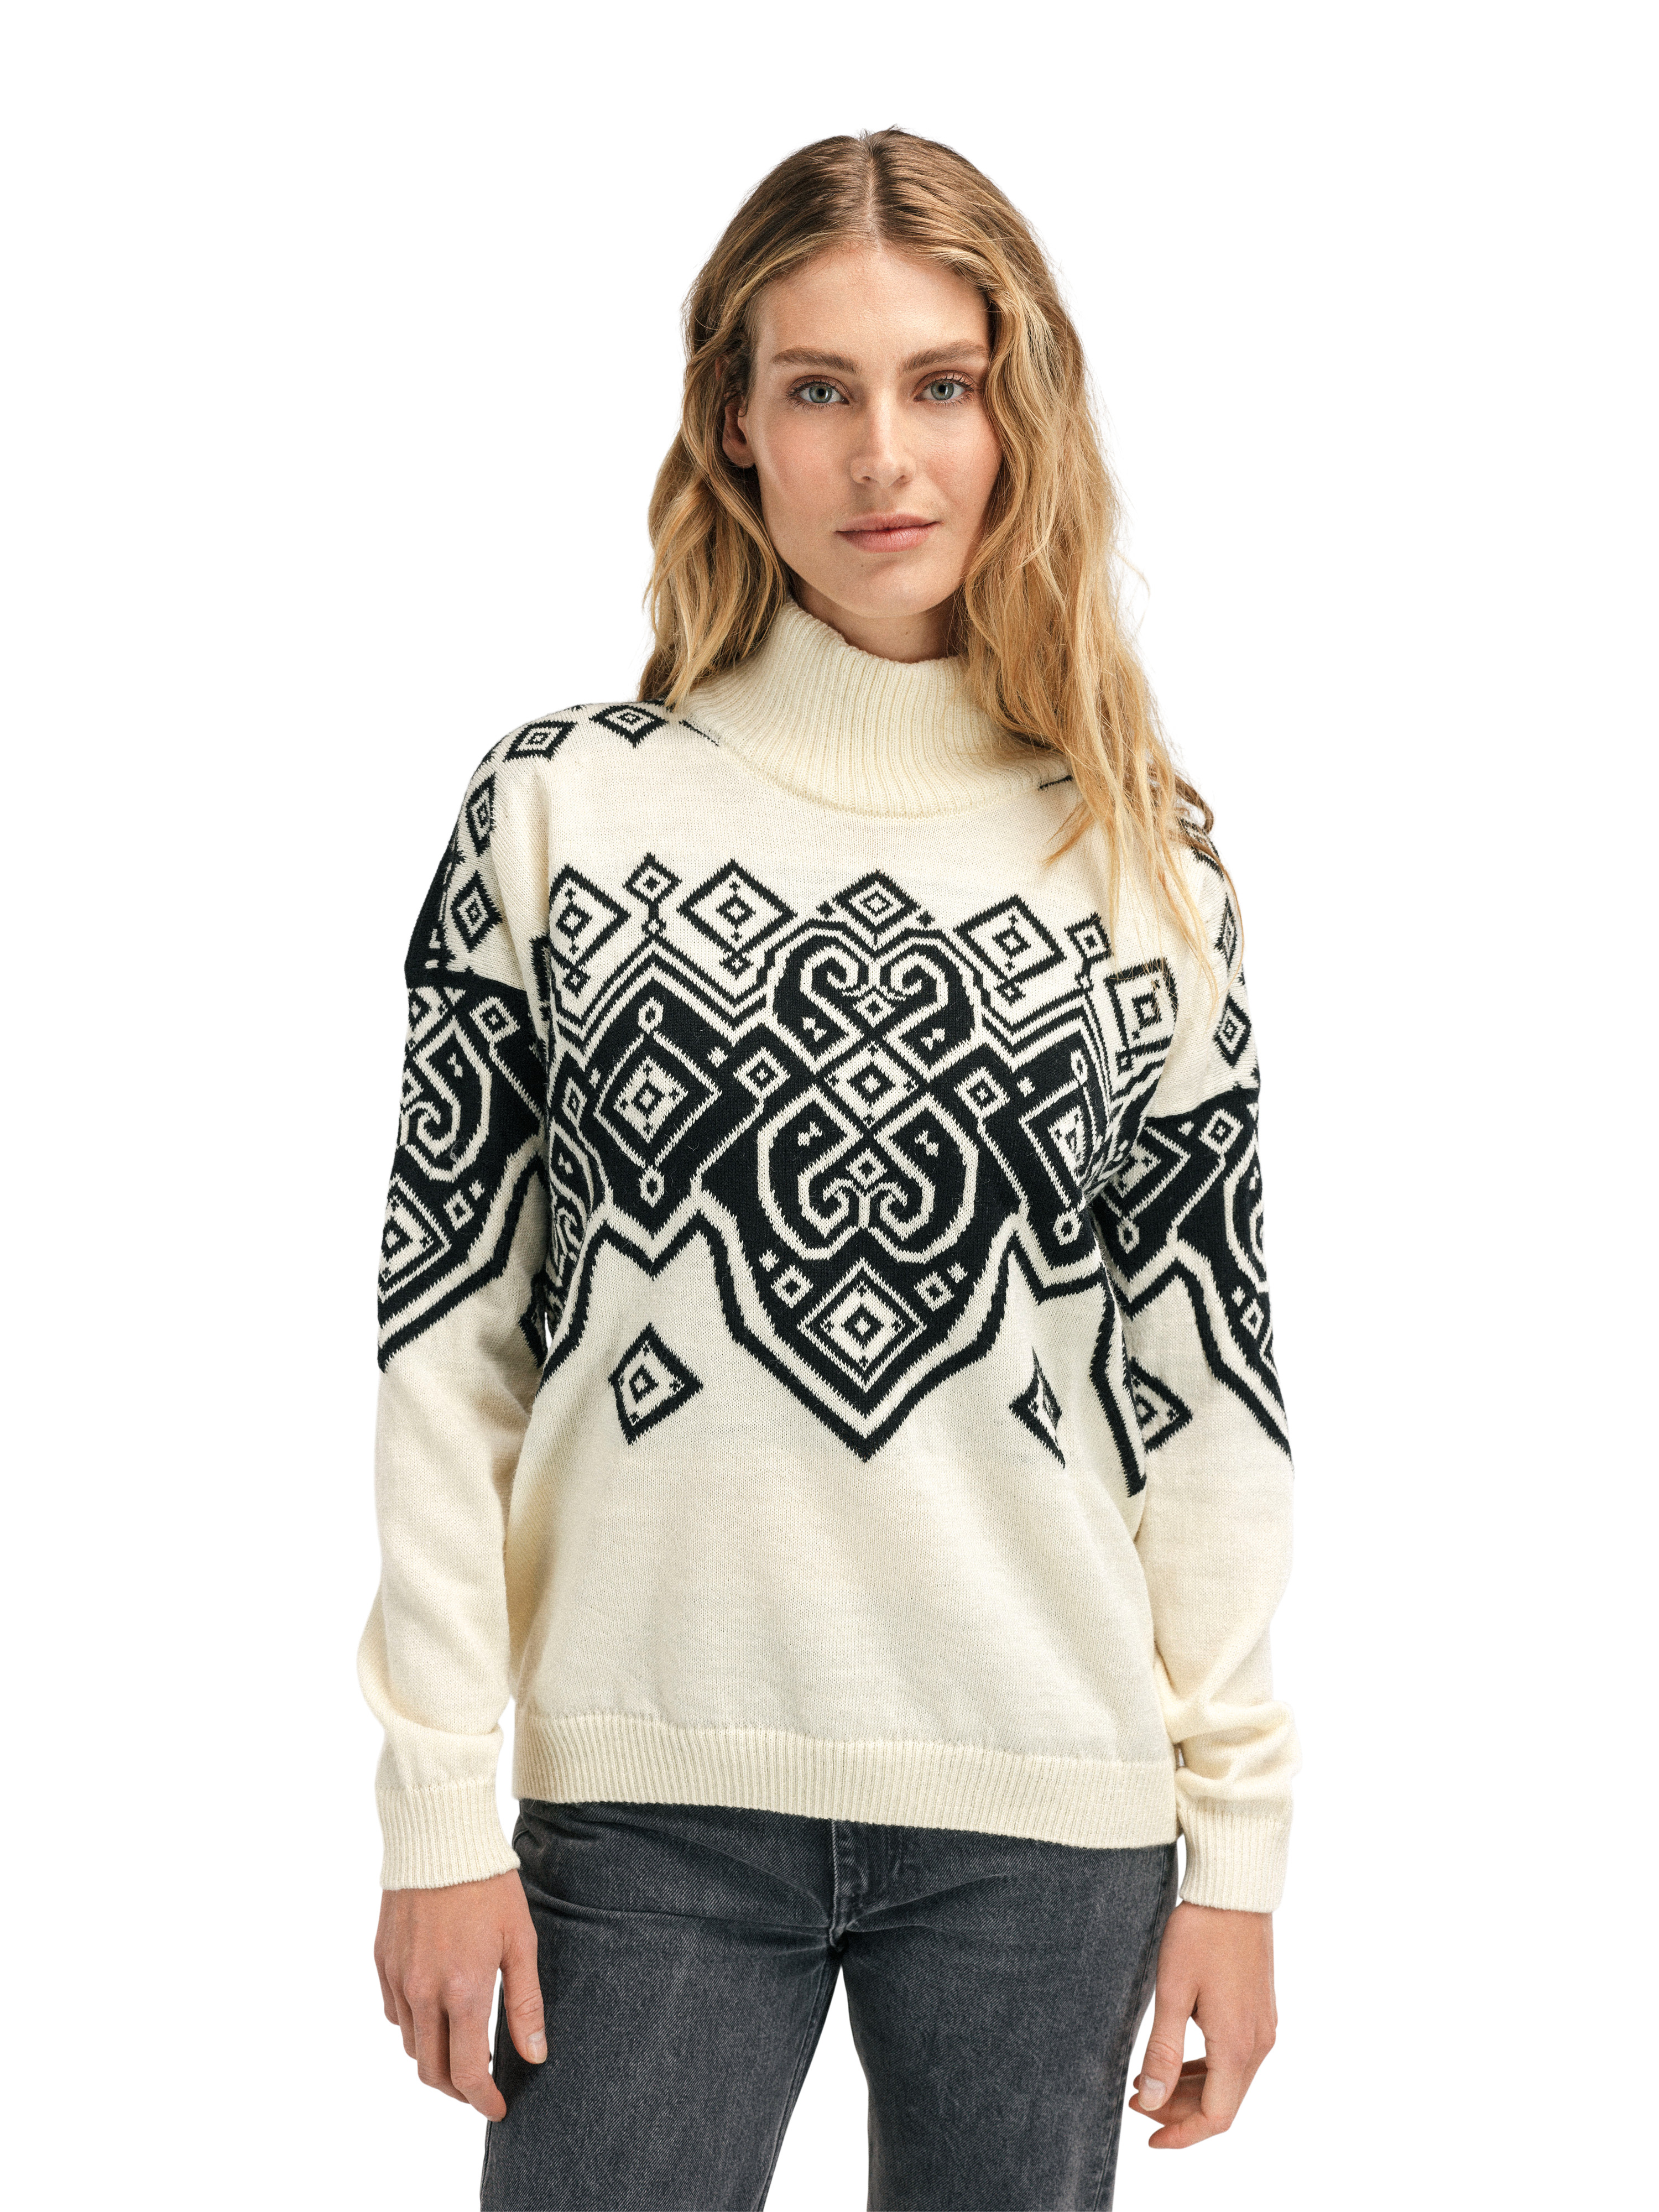 Falun Heron Sweater - Women - Offwhite - Dale of Norway - Dale of